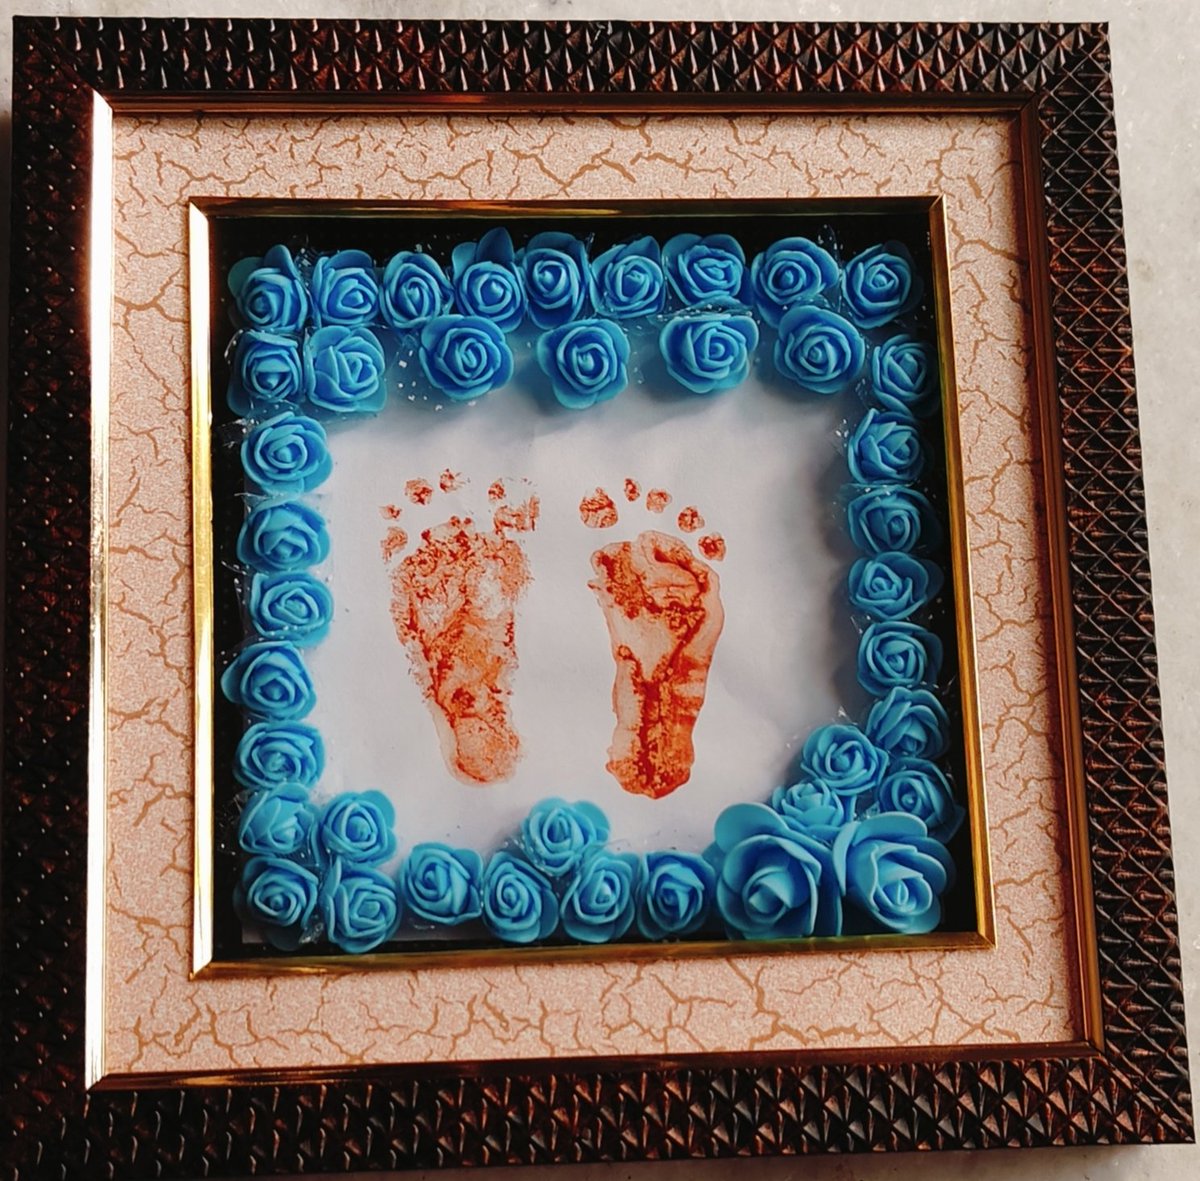 Gift Idea for newborn❤️
#suhani #giftideas #giftforbaby #diykeychain #newborn